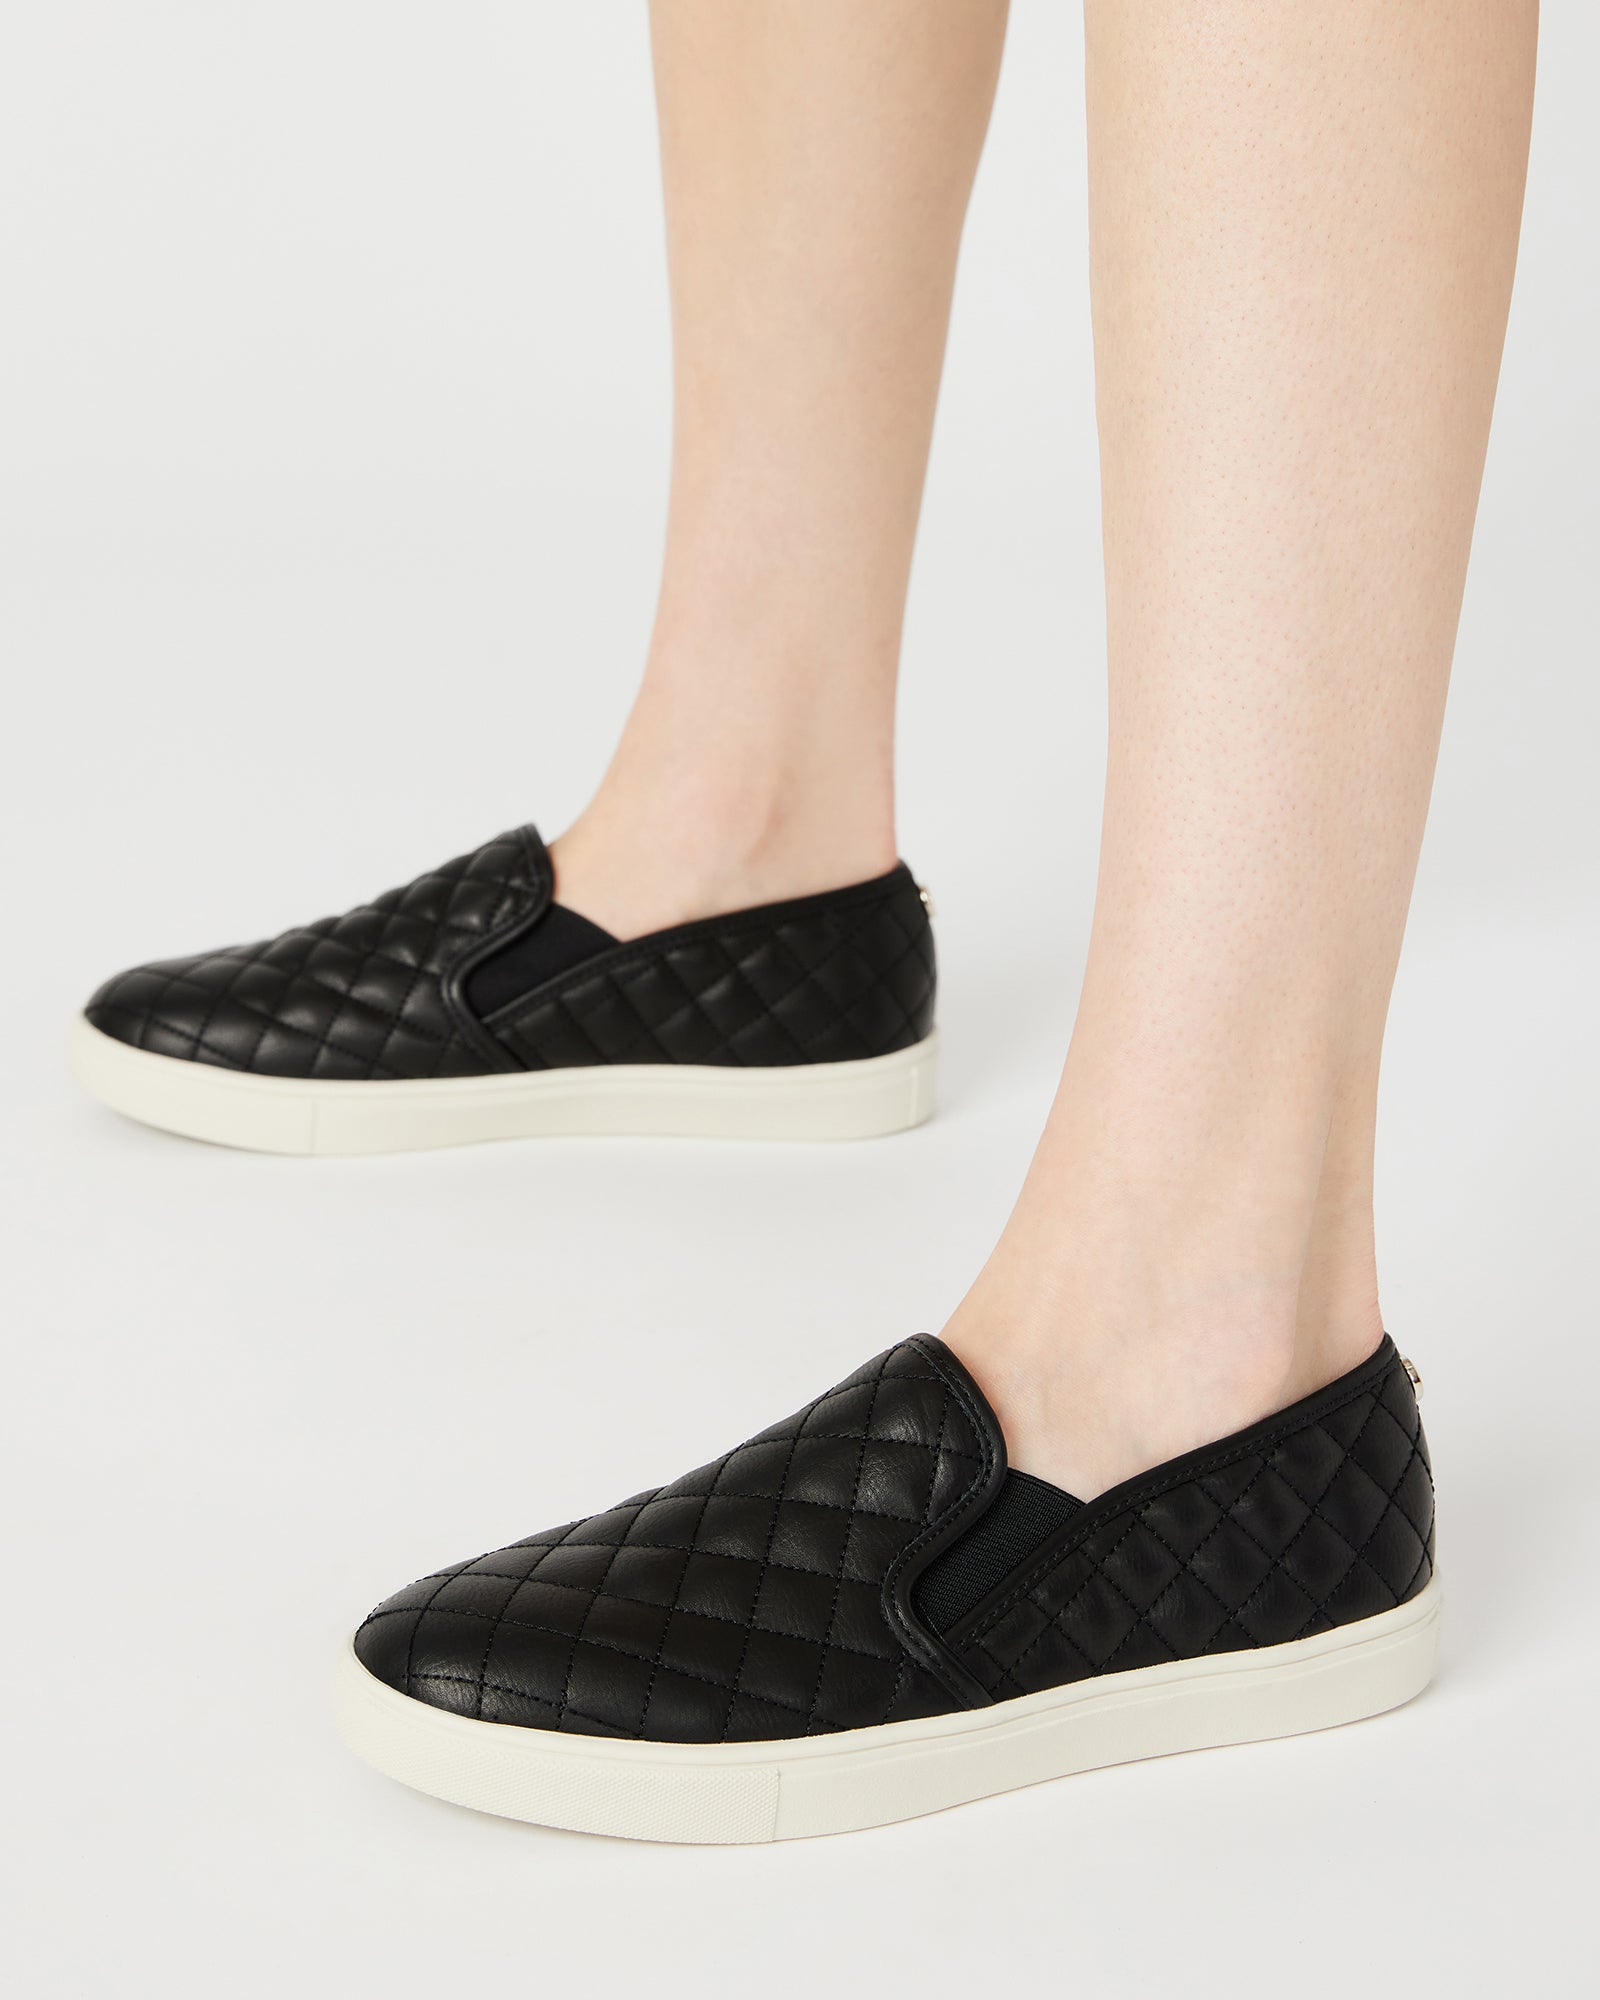 ECENTRCQ Black Slip on Sneakers | Women's Leather Slip on Sneakers ...